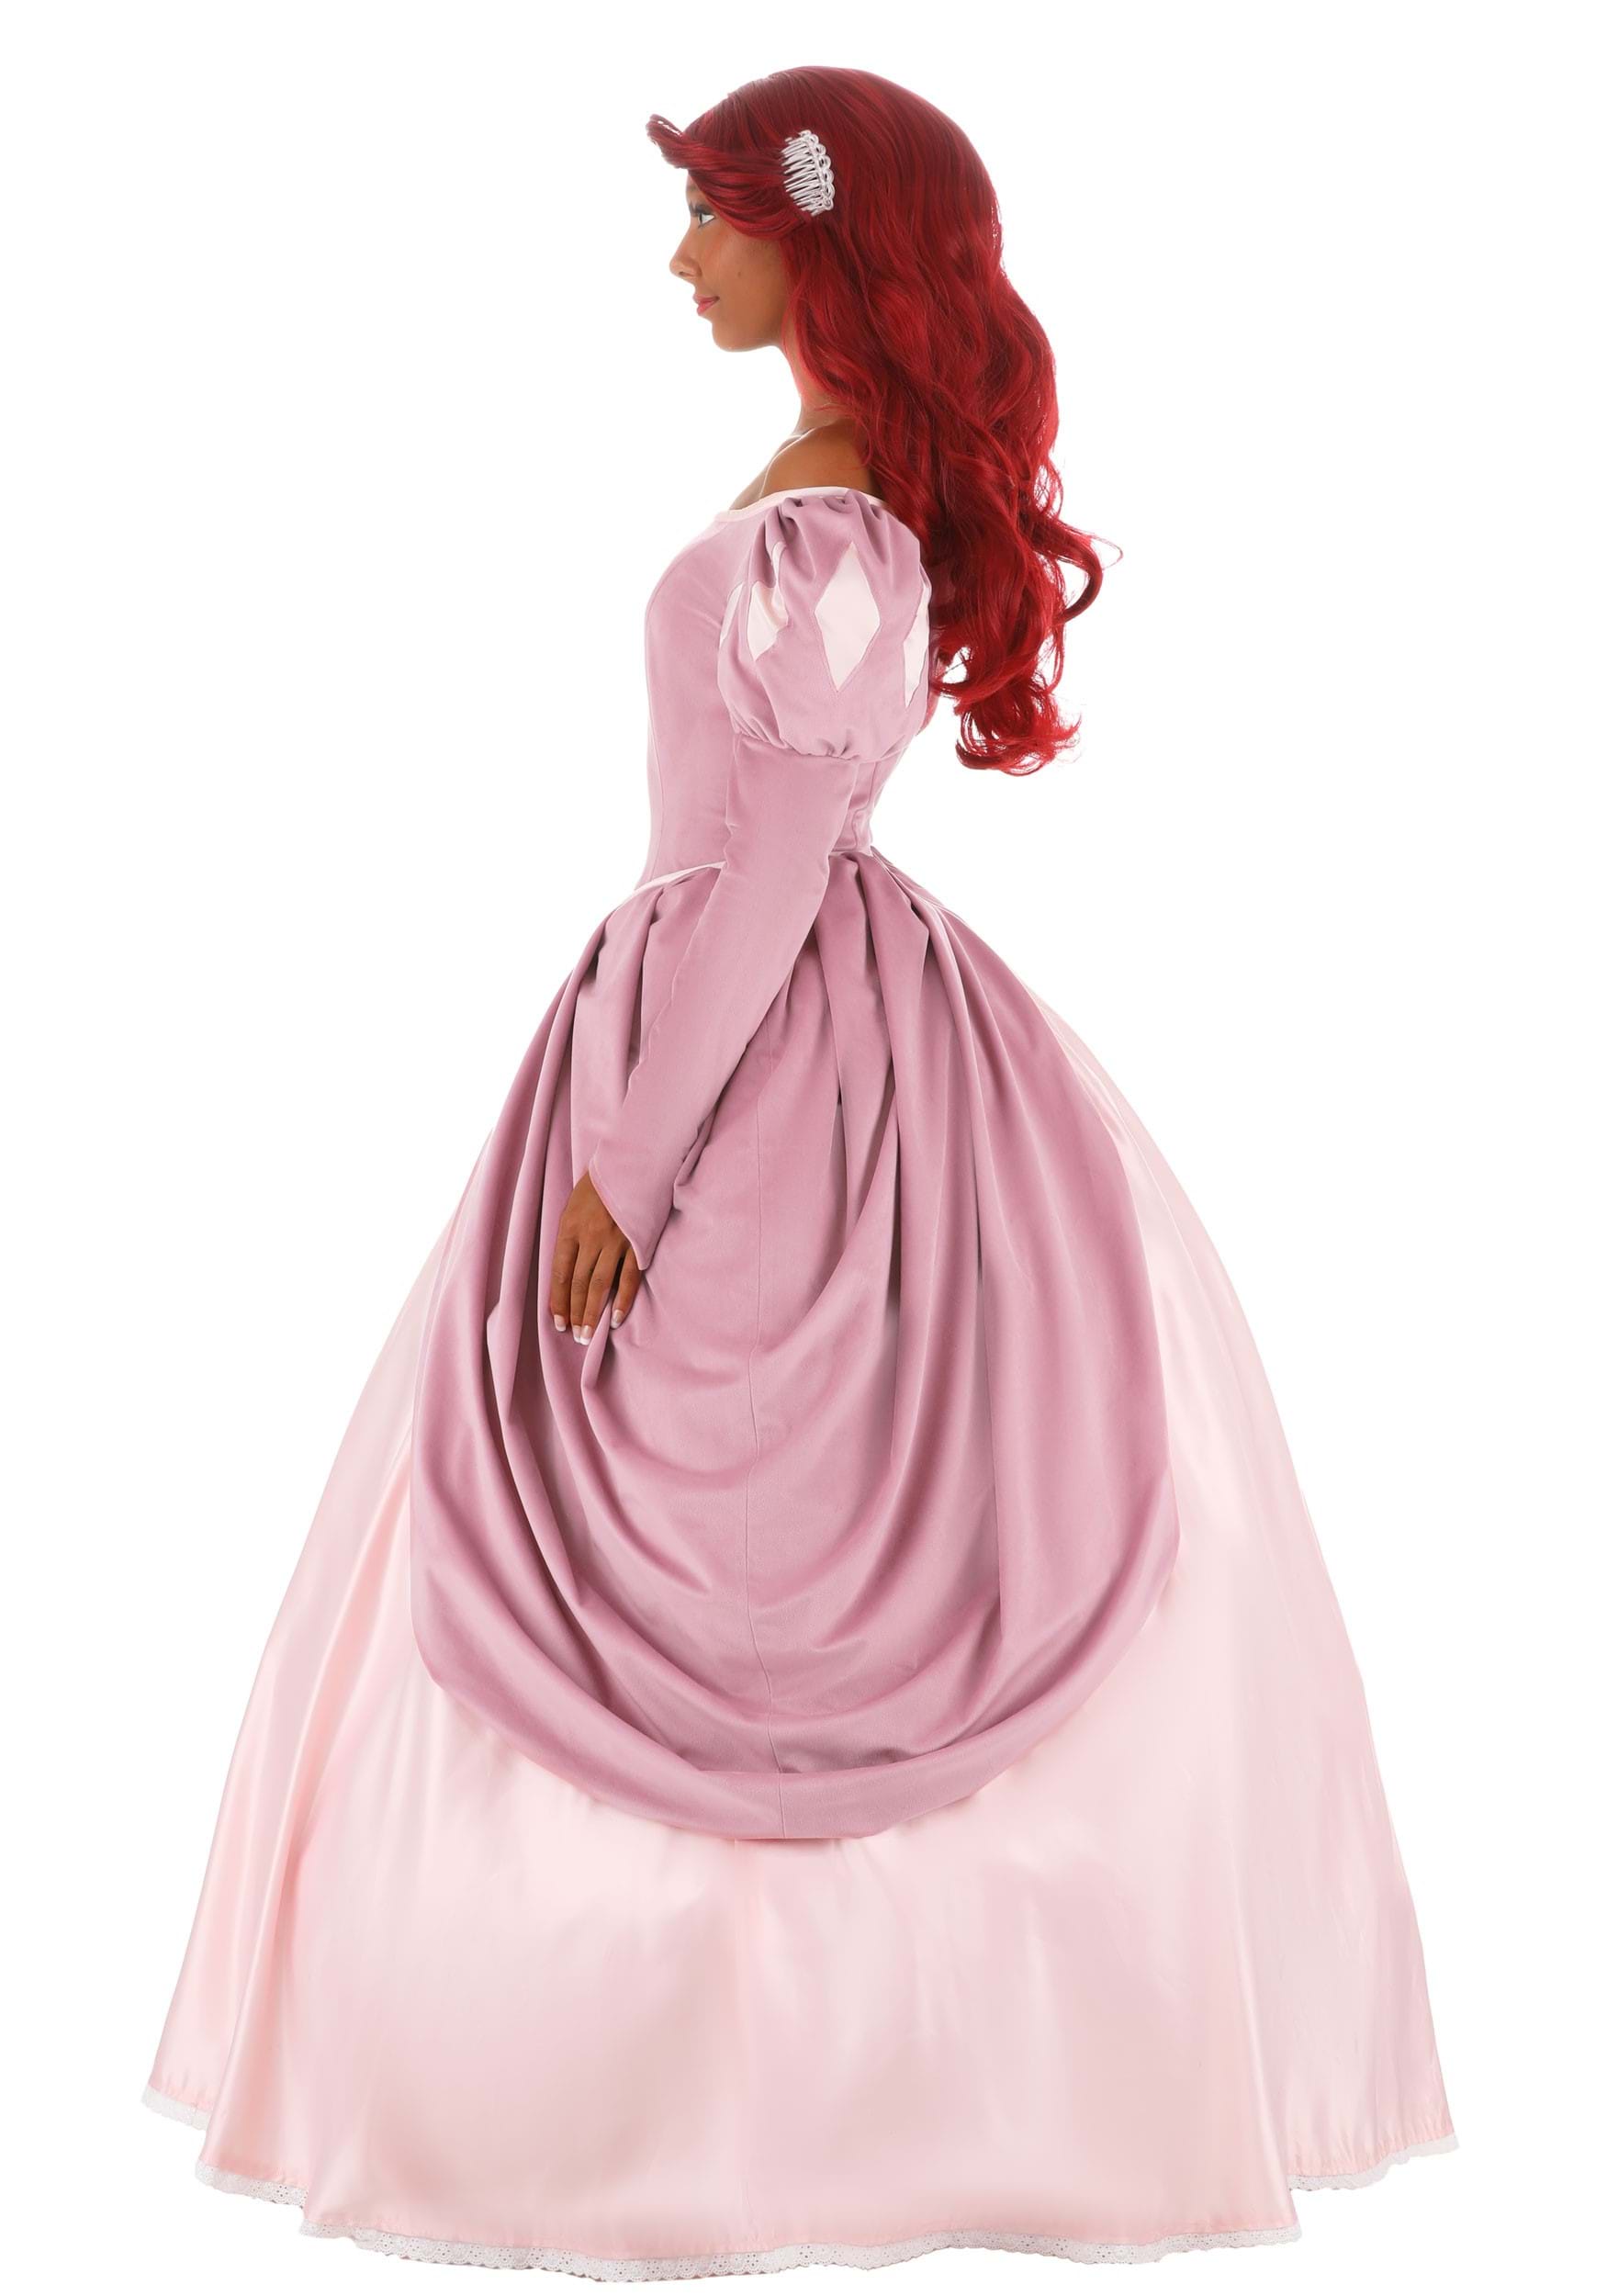 https://images.halloweencostumes.com/products/83428/2-1-299626/adult-disney-pink-dress-ariel-costume-alt-4.jpg